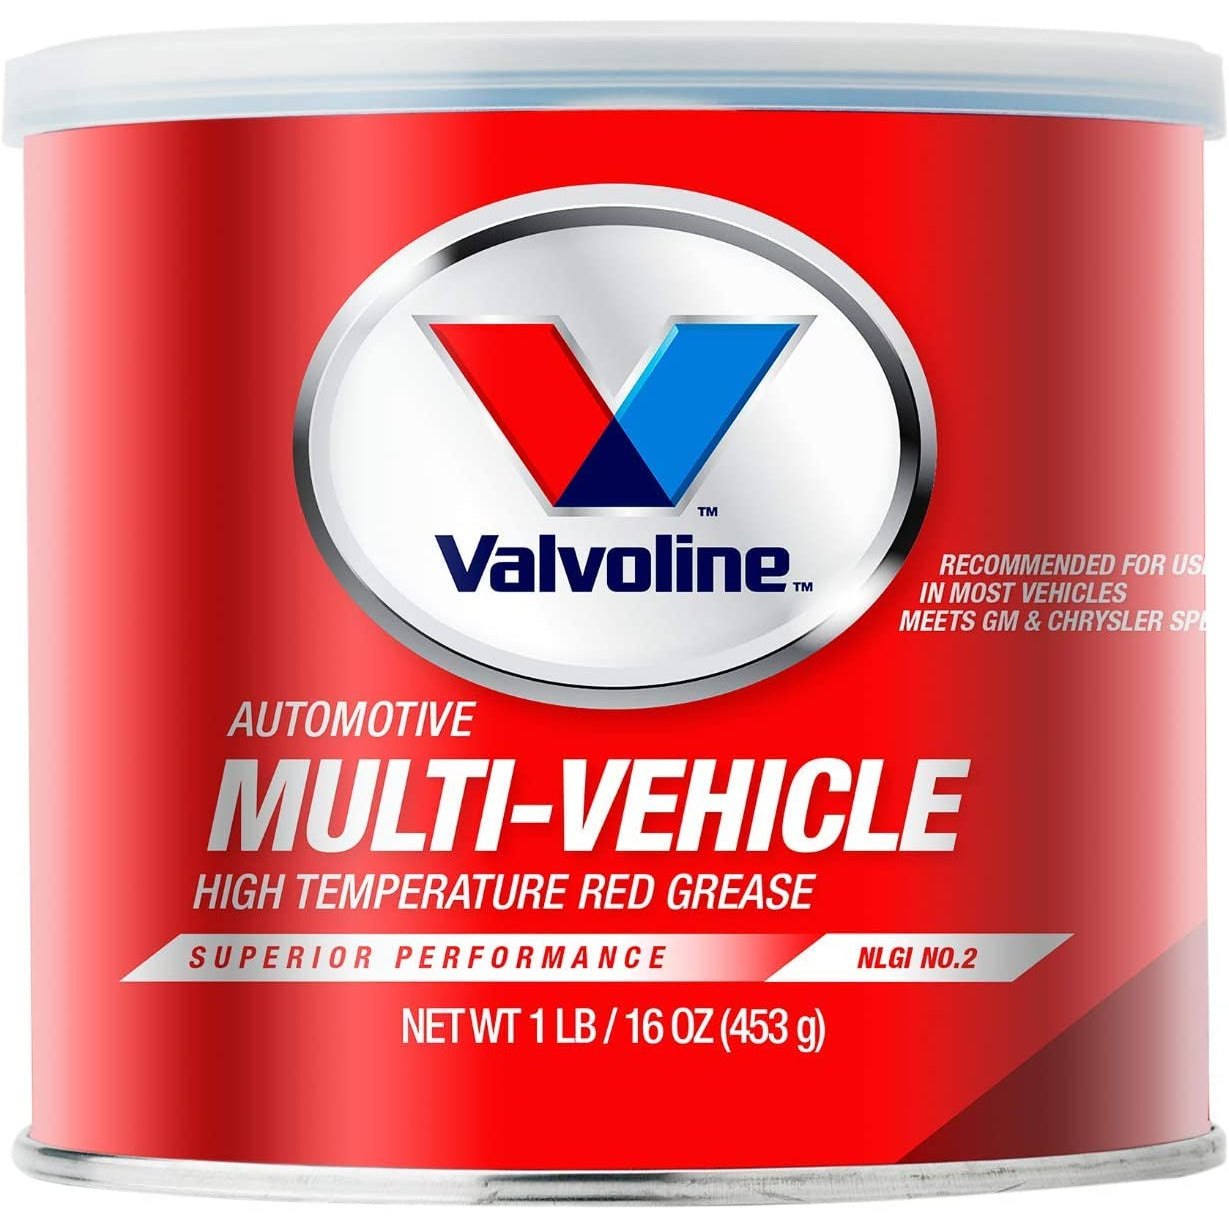 VAL VV614 Valvoline Multi-Vehicle #2 EP Hi-Temp Red Grease (1 lb)